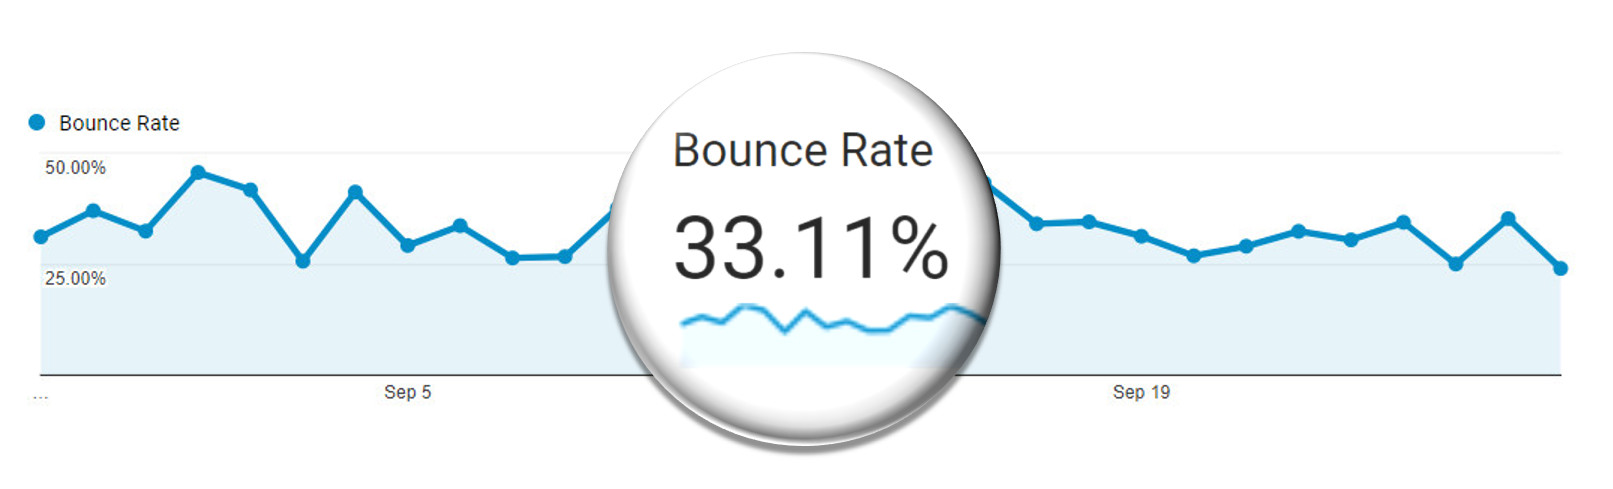 Bounce rate diagram